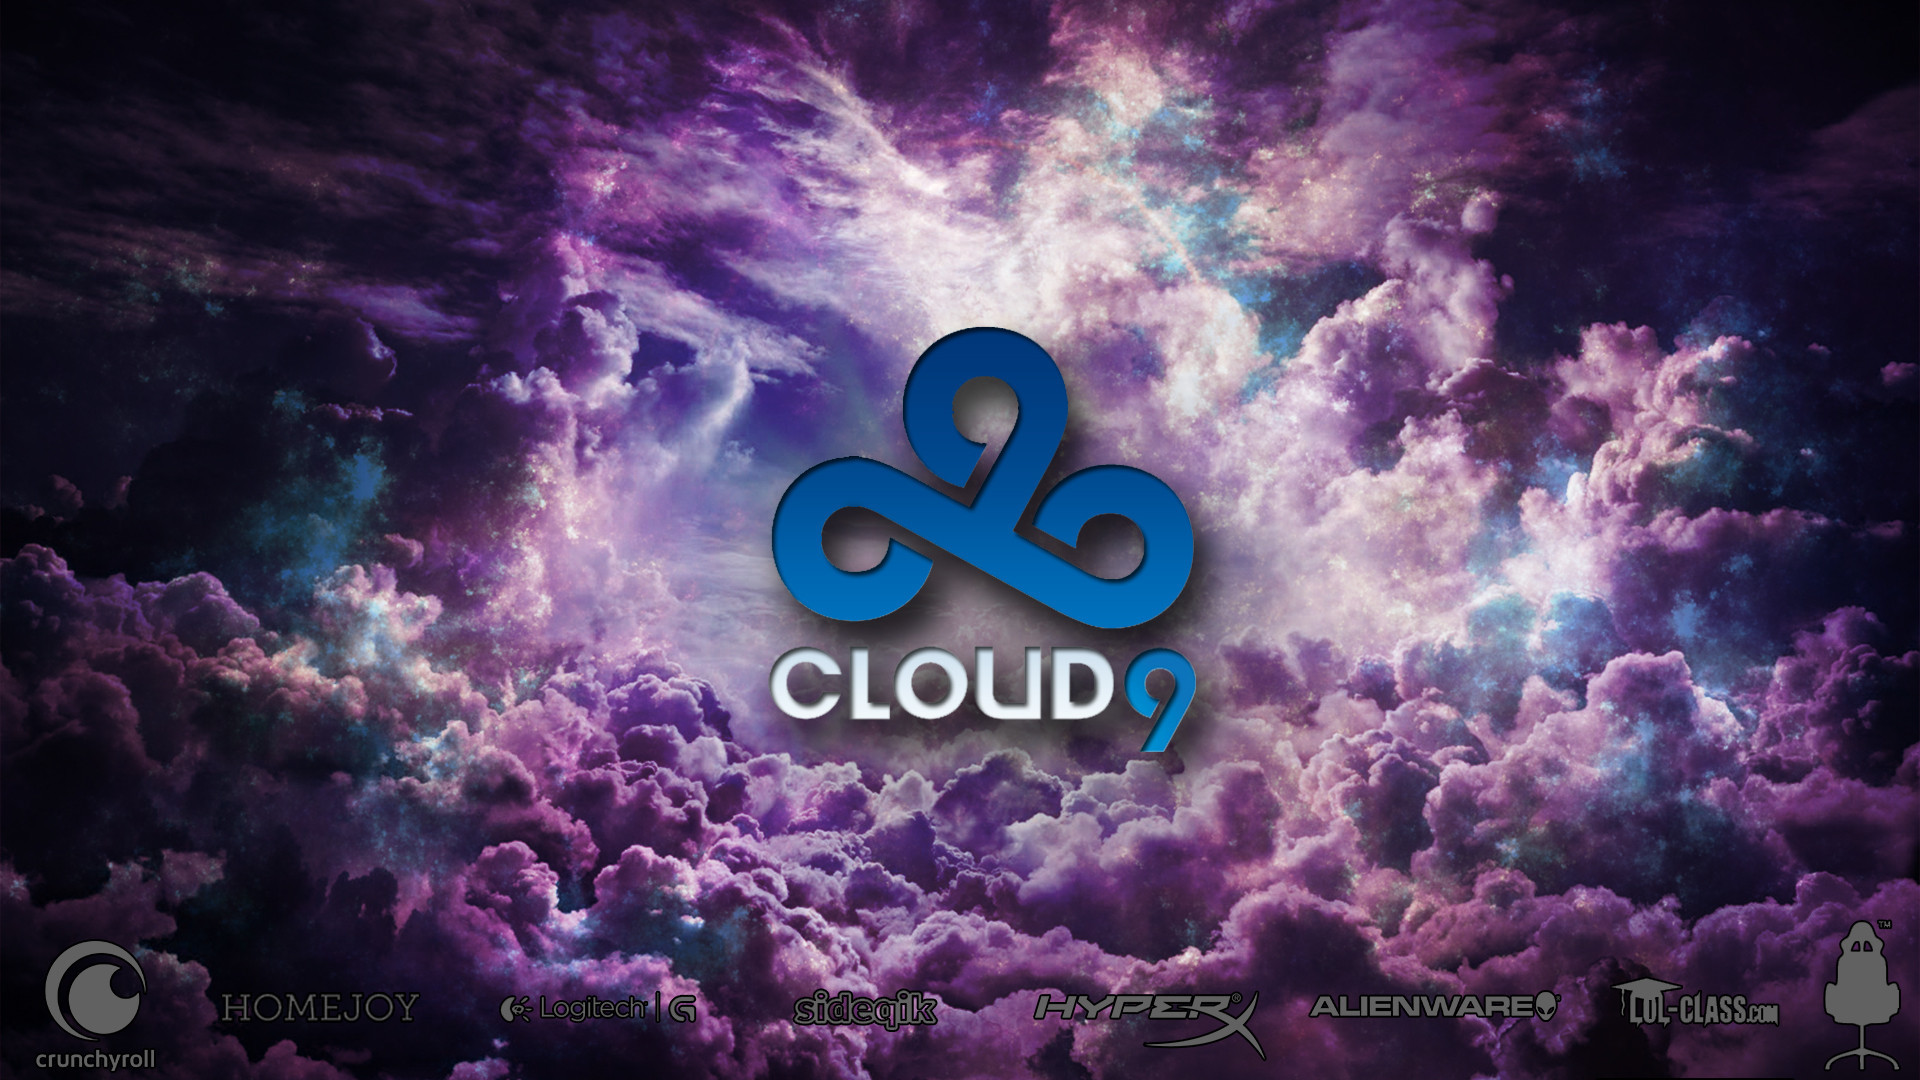 Cloud 9 4K wallpaper download